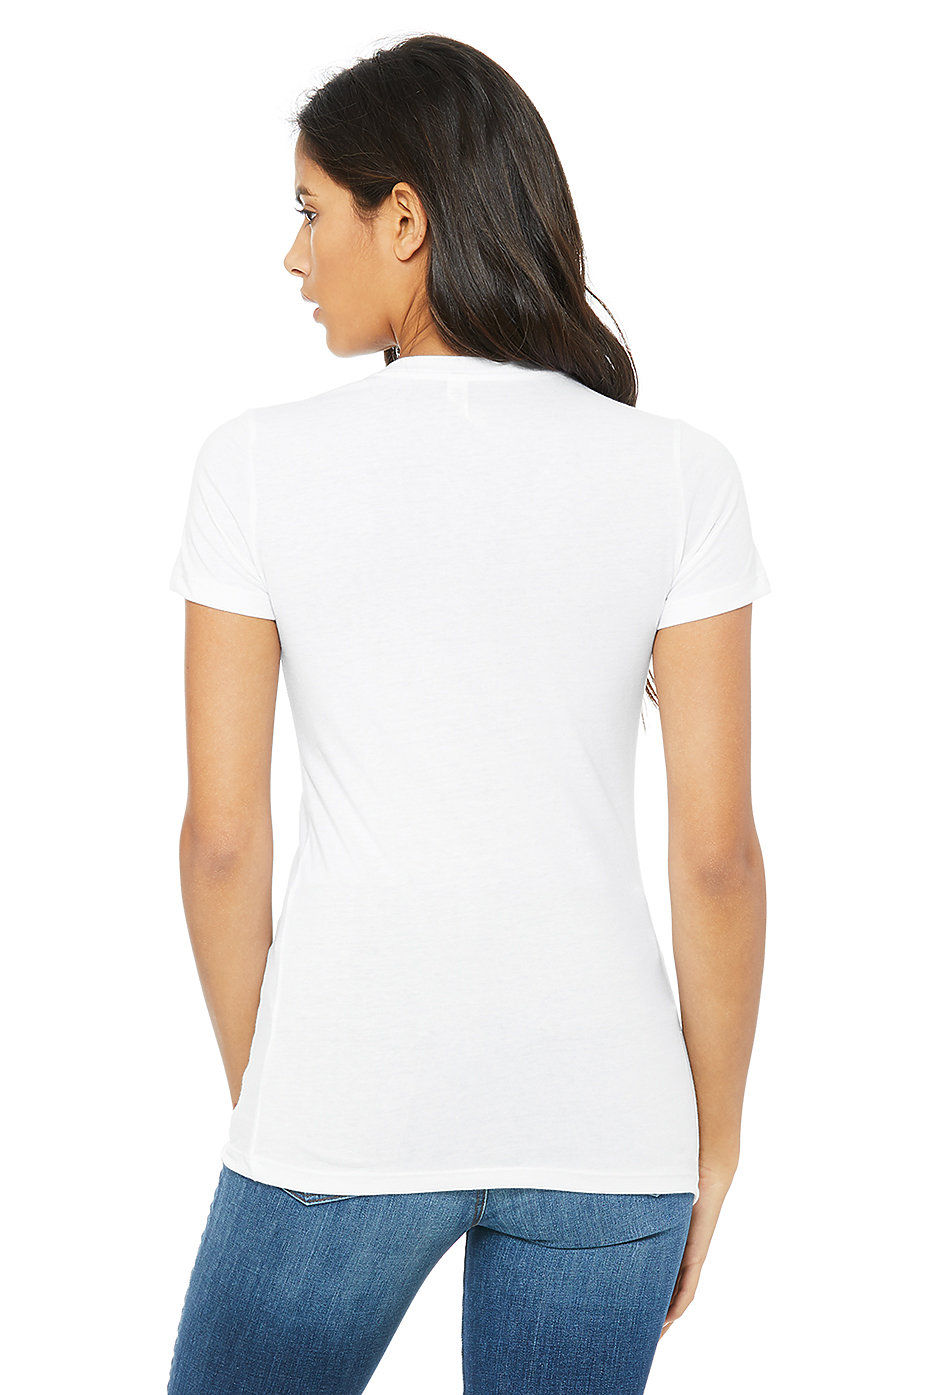 Wholesale Tee Shirts | Bulk, Plain Blank T Shirts | Wholesale Clothing Distributors BELLA+CANVAS ®